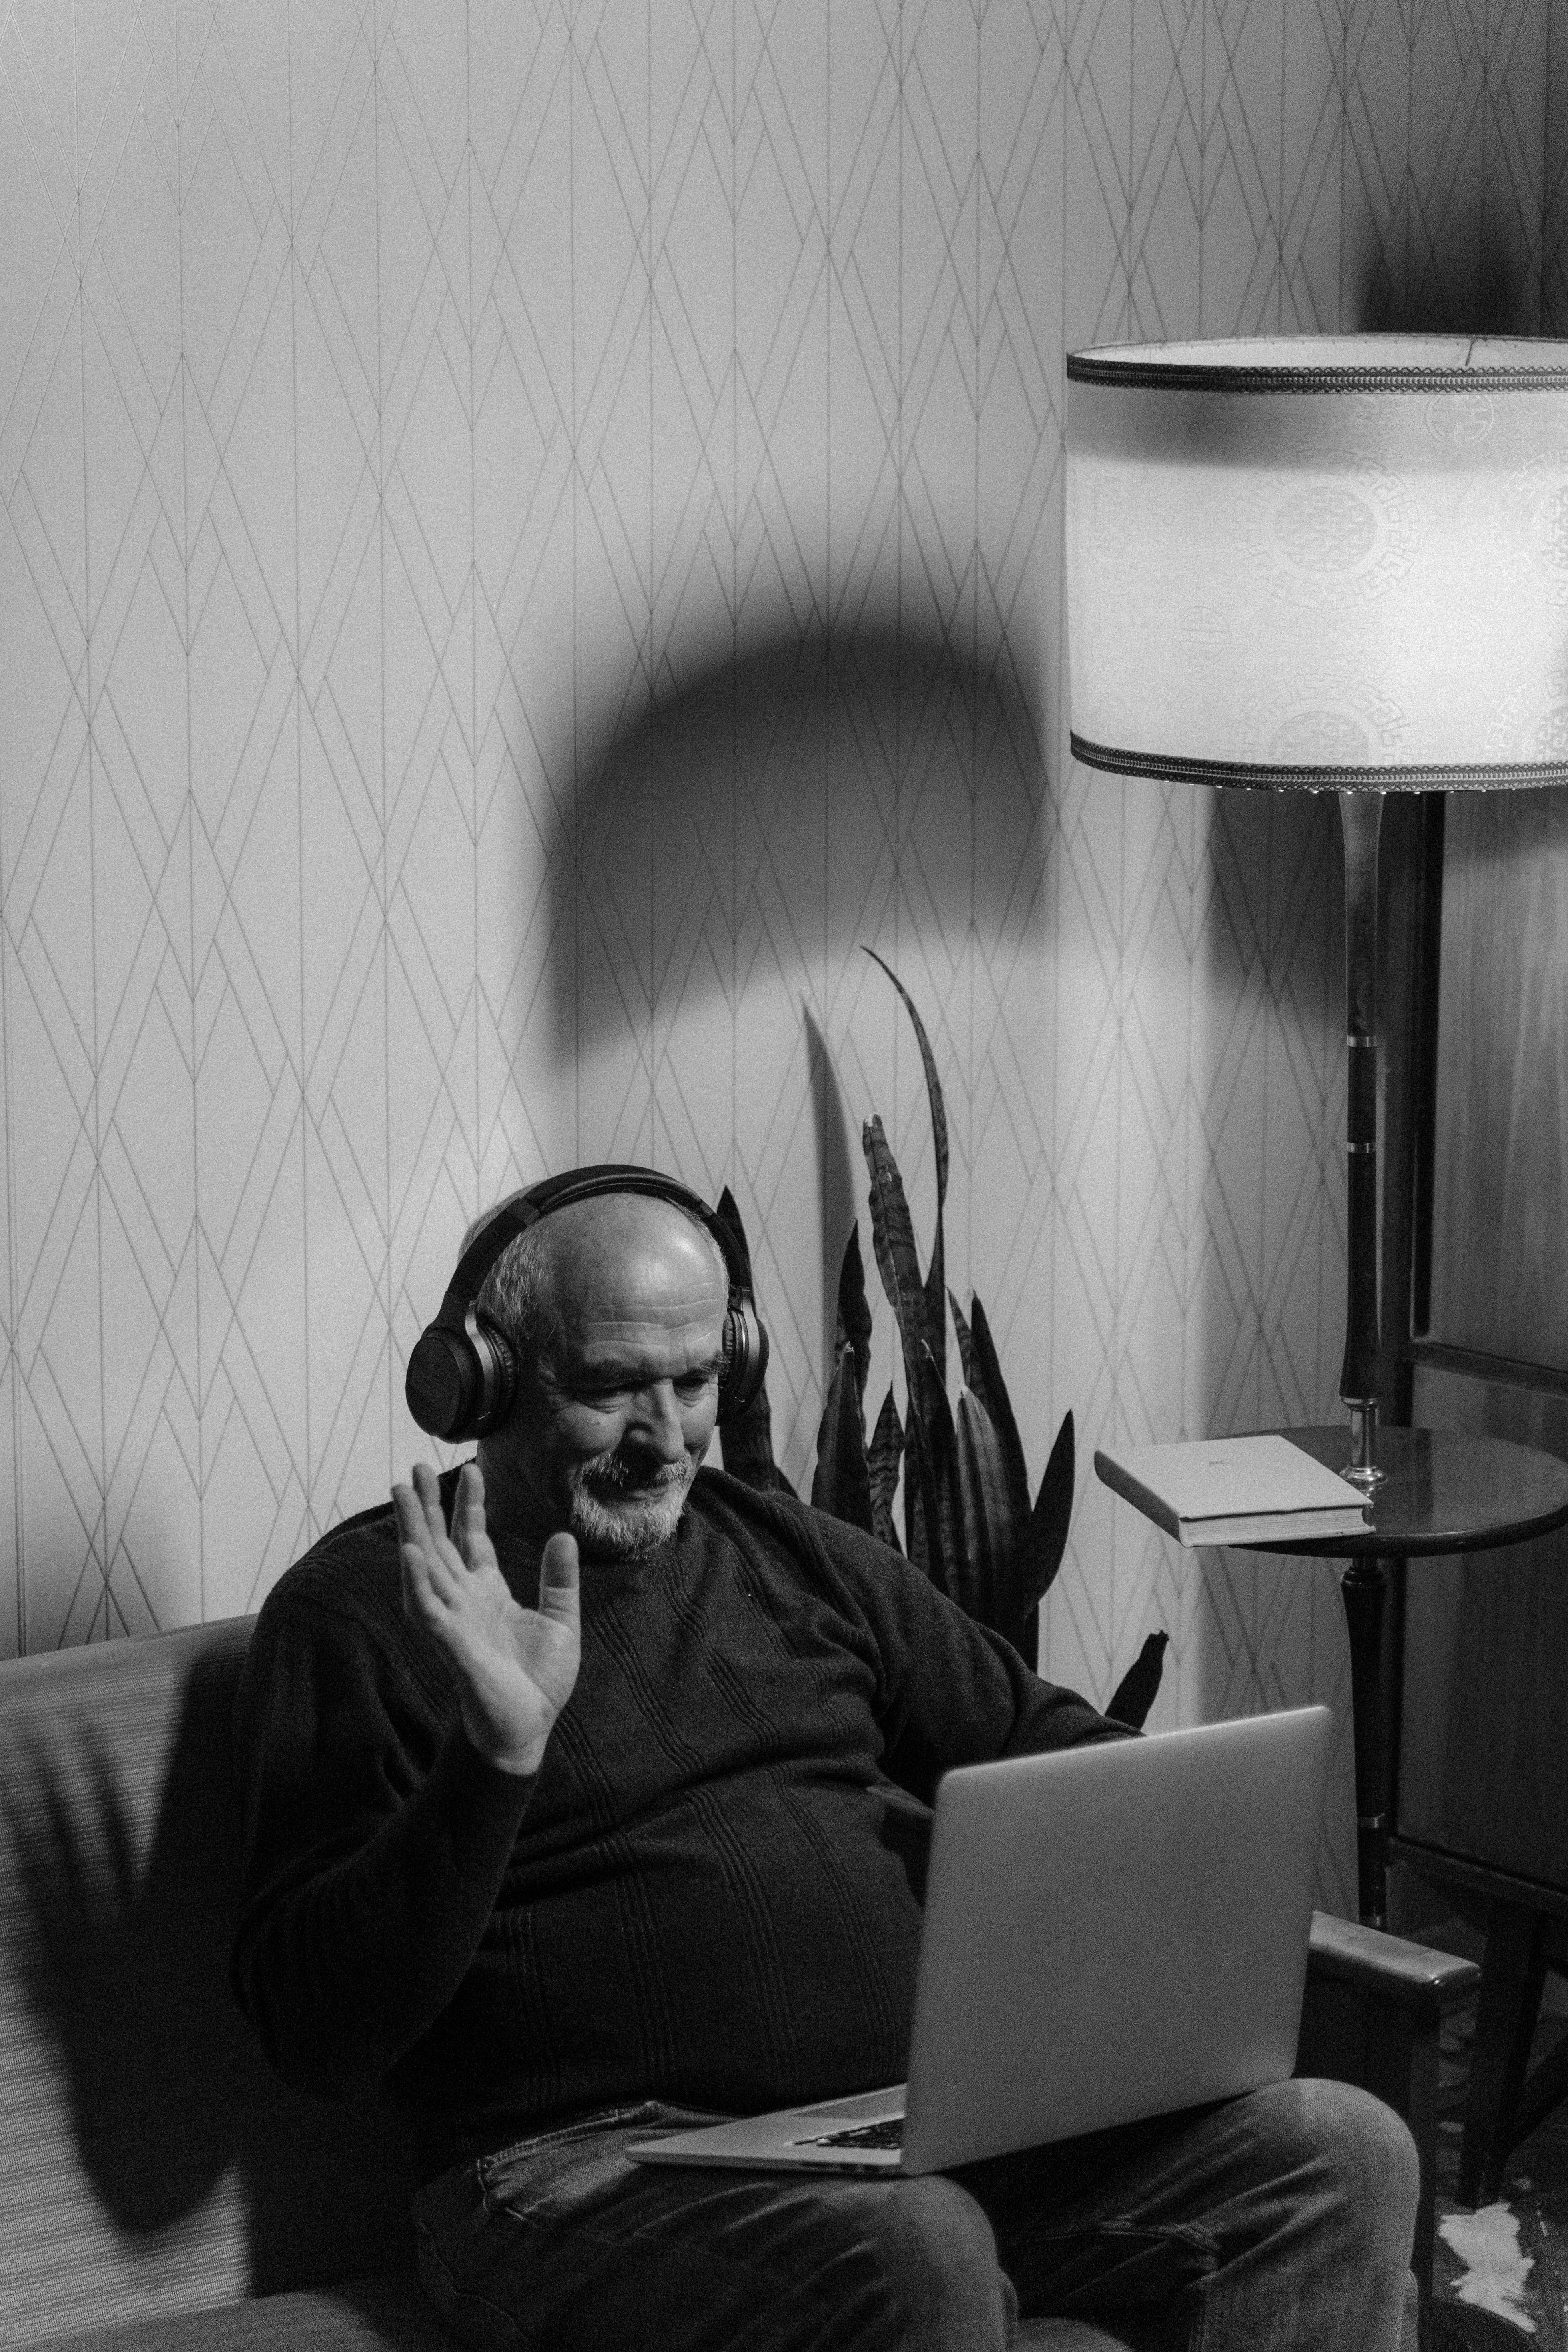 monochrome photograph of an elderly man wearing headphones